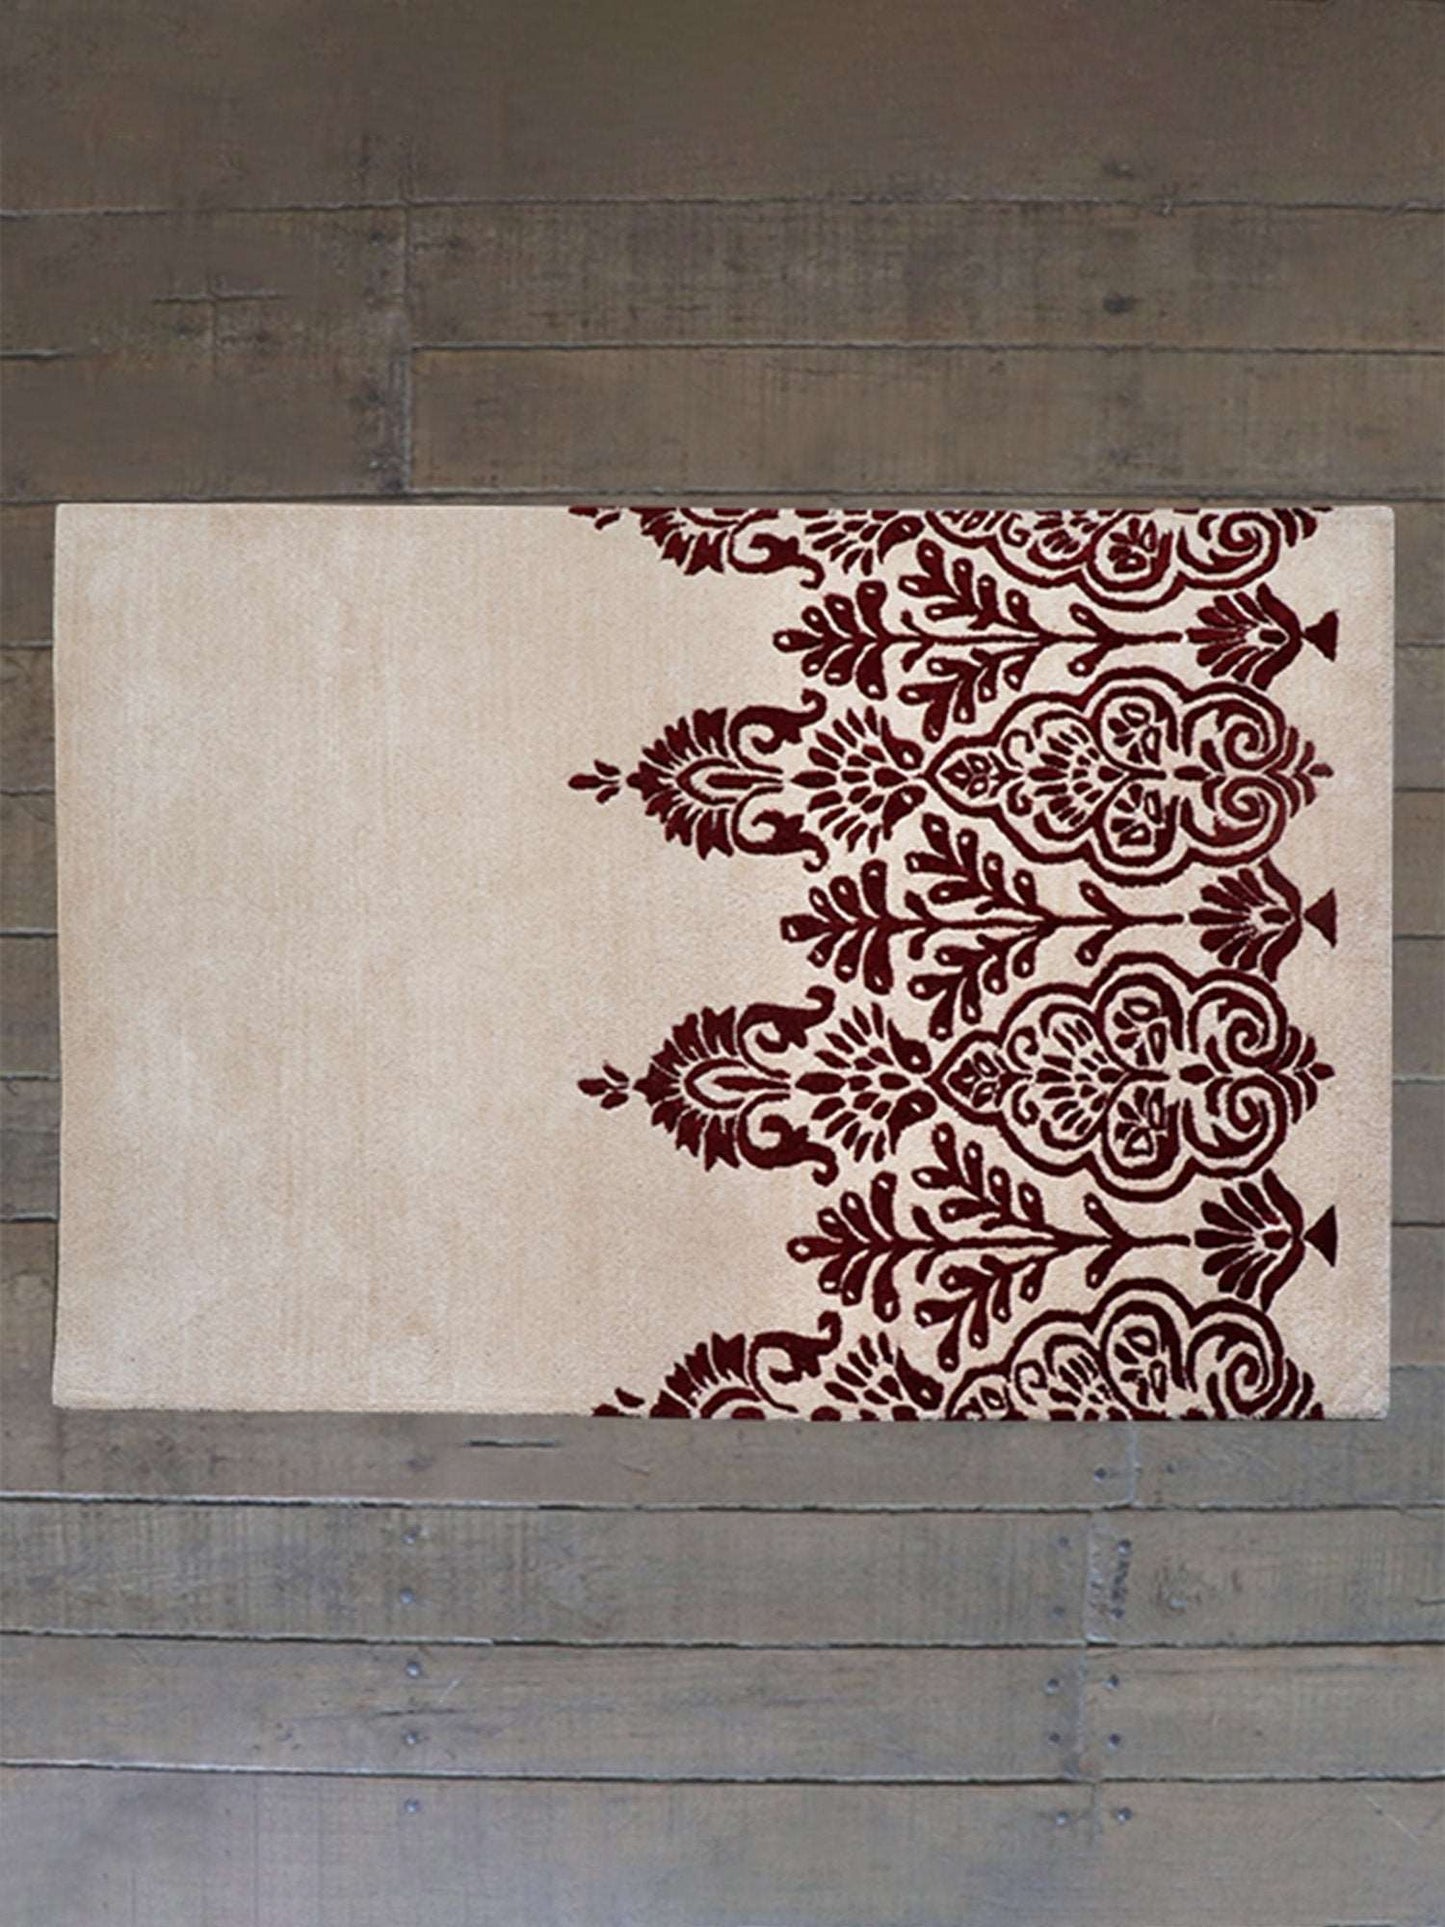 Carpet Hand Tufted 100% Woollen Damask Beige Maroon - 4ft X 6ft